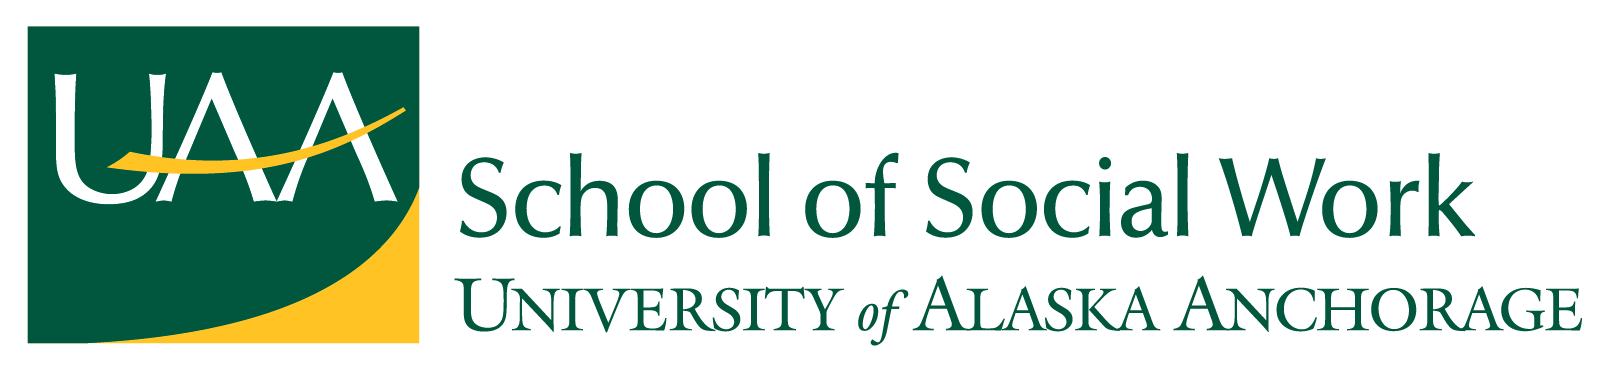 school of social work logo